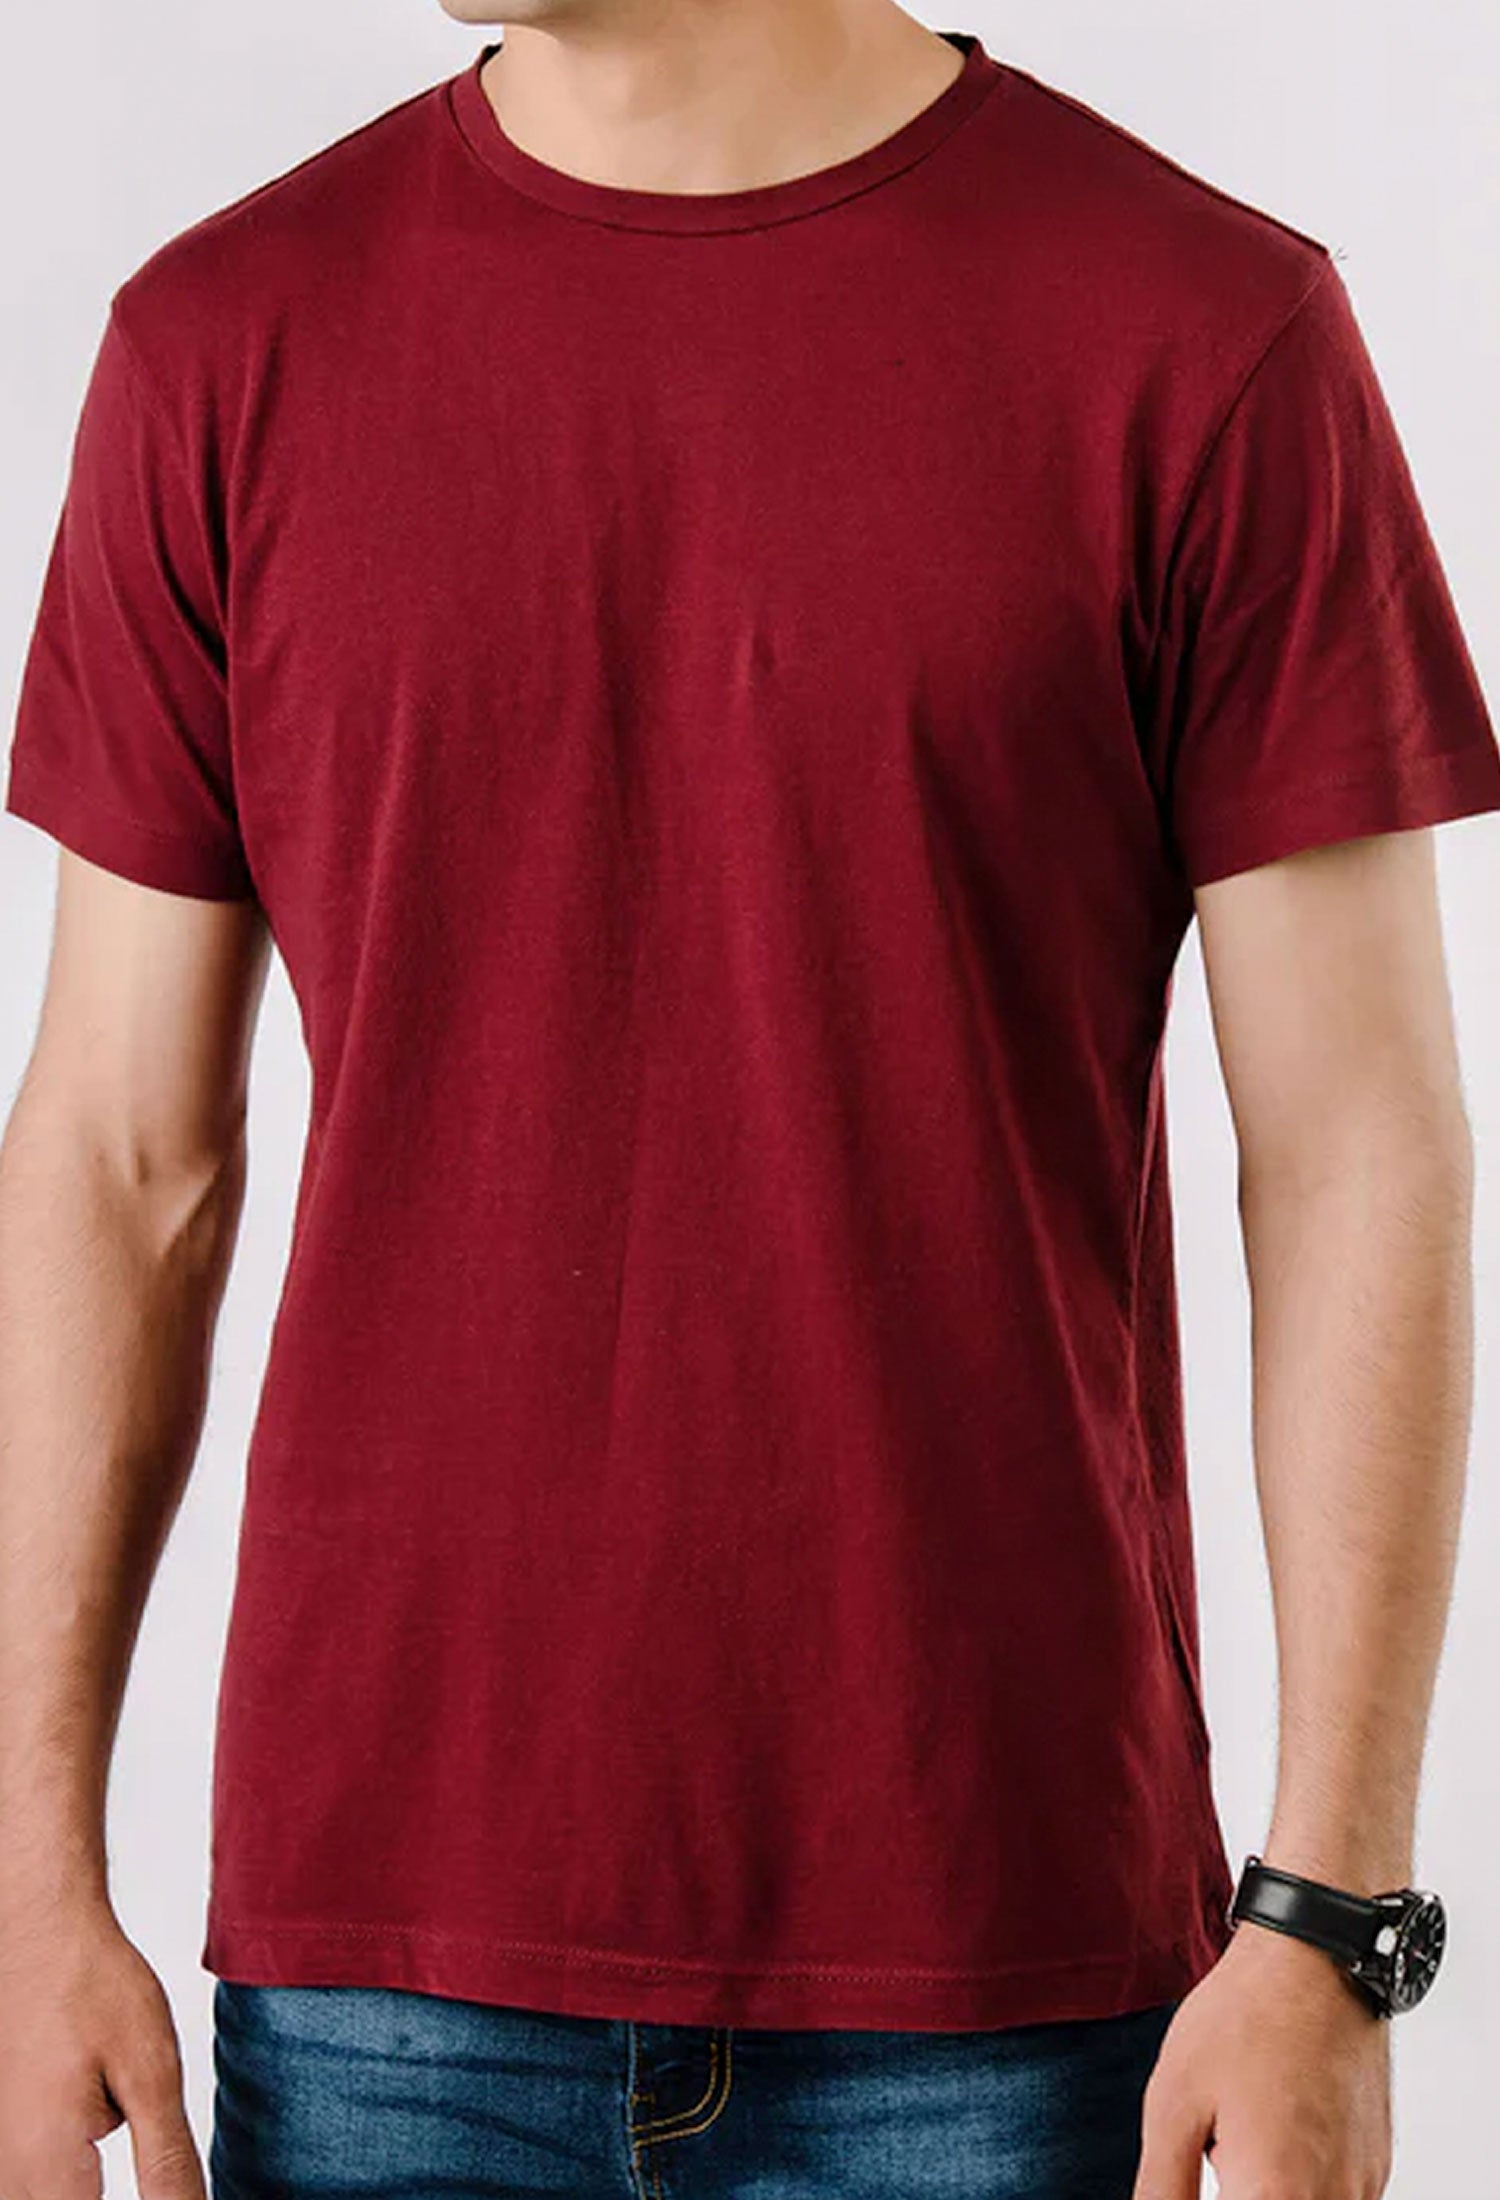 Maroon Basic T-Shirt (T-SHB-0001)